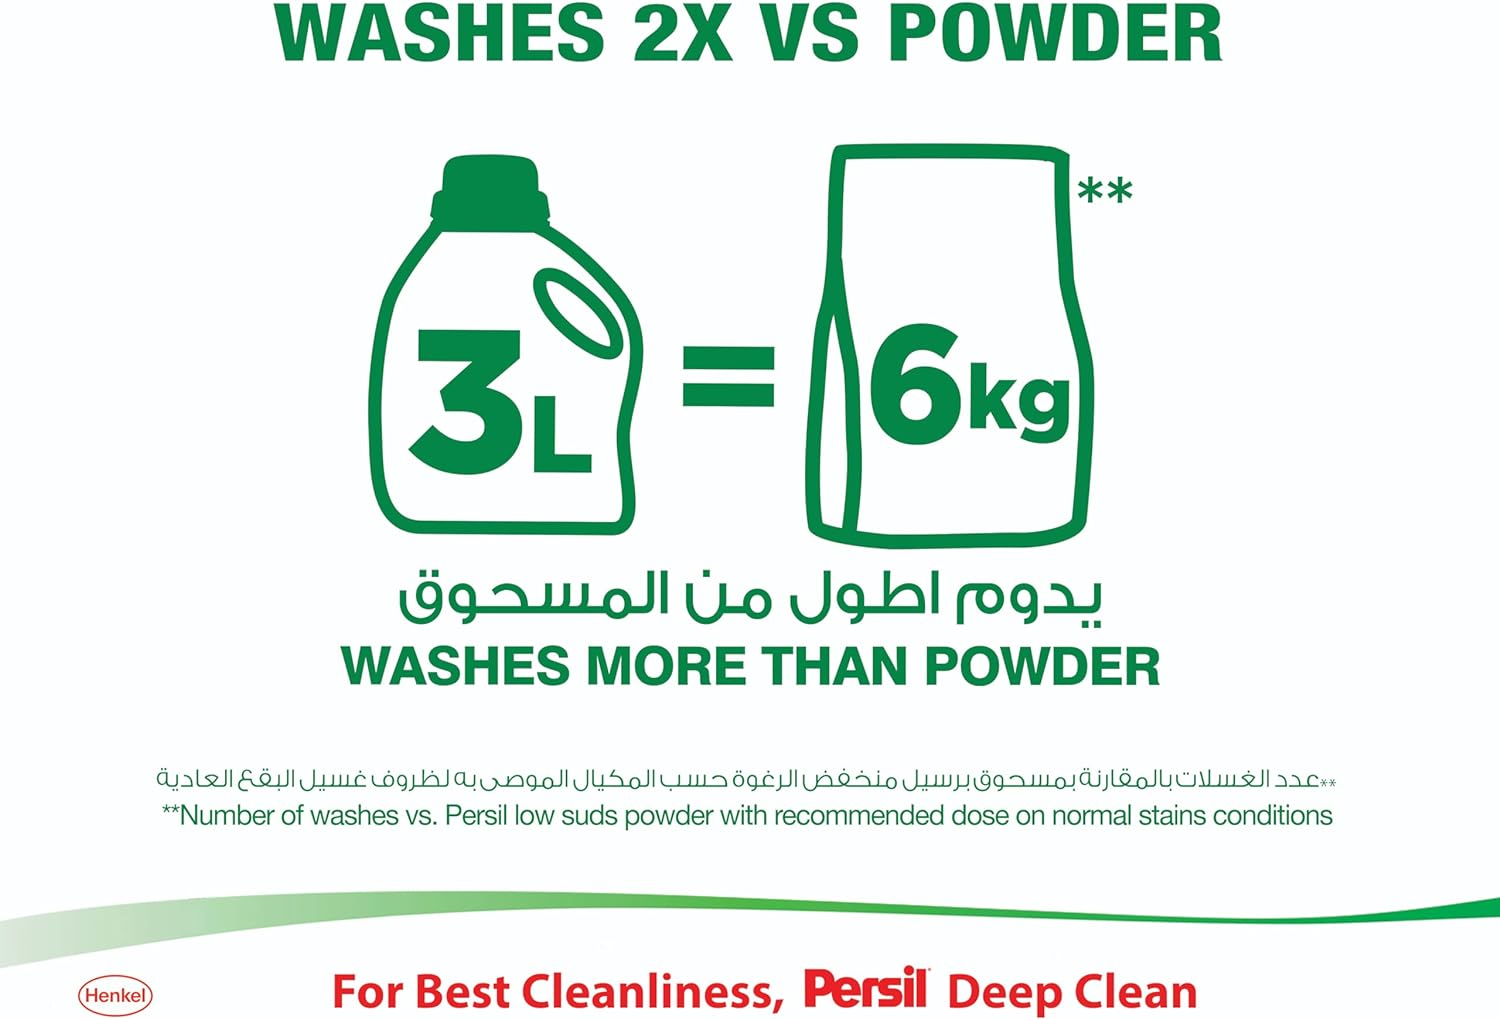 Persil Power Gel Liquid Laundry Detergent, Lavender - 4.8 Litres